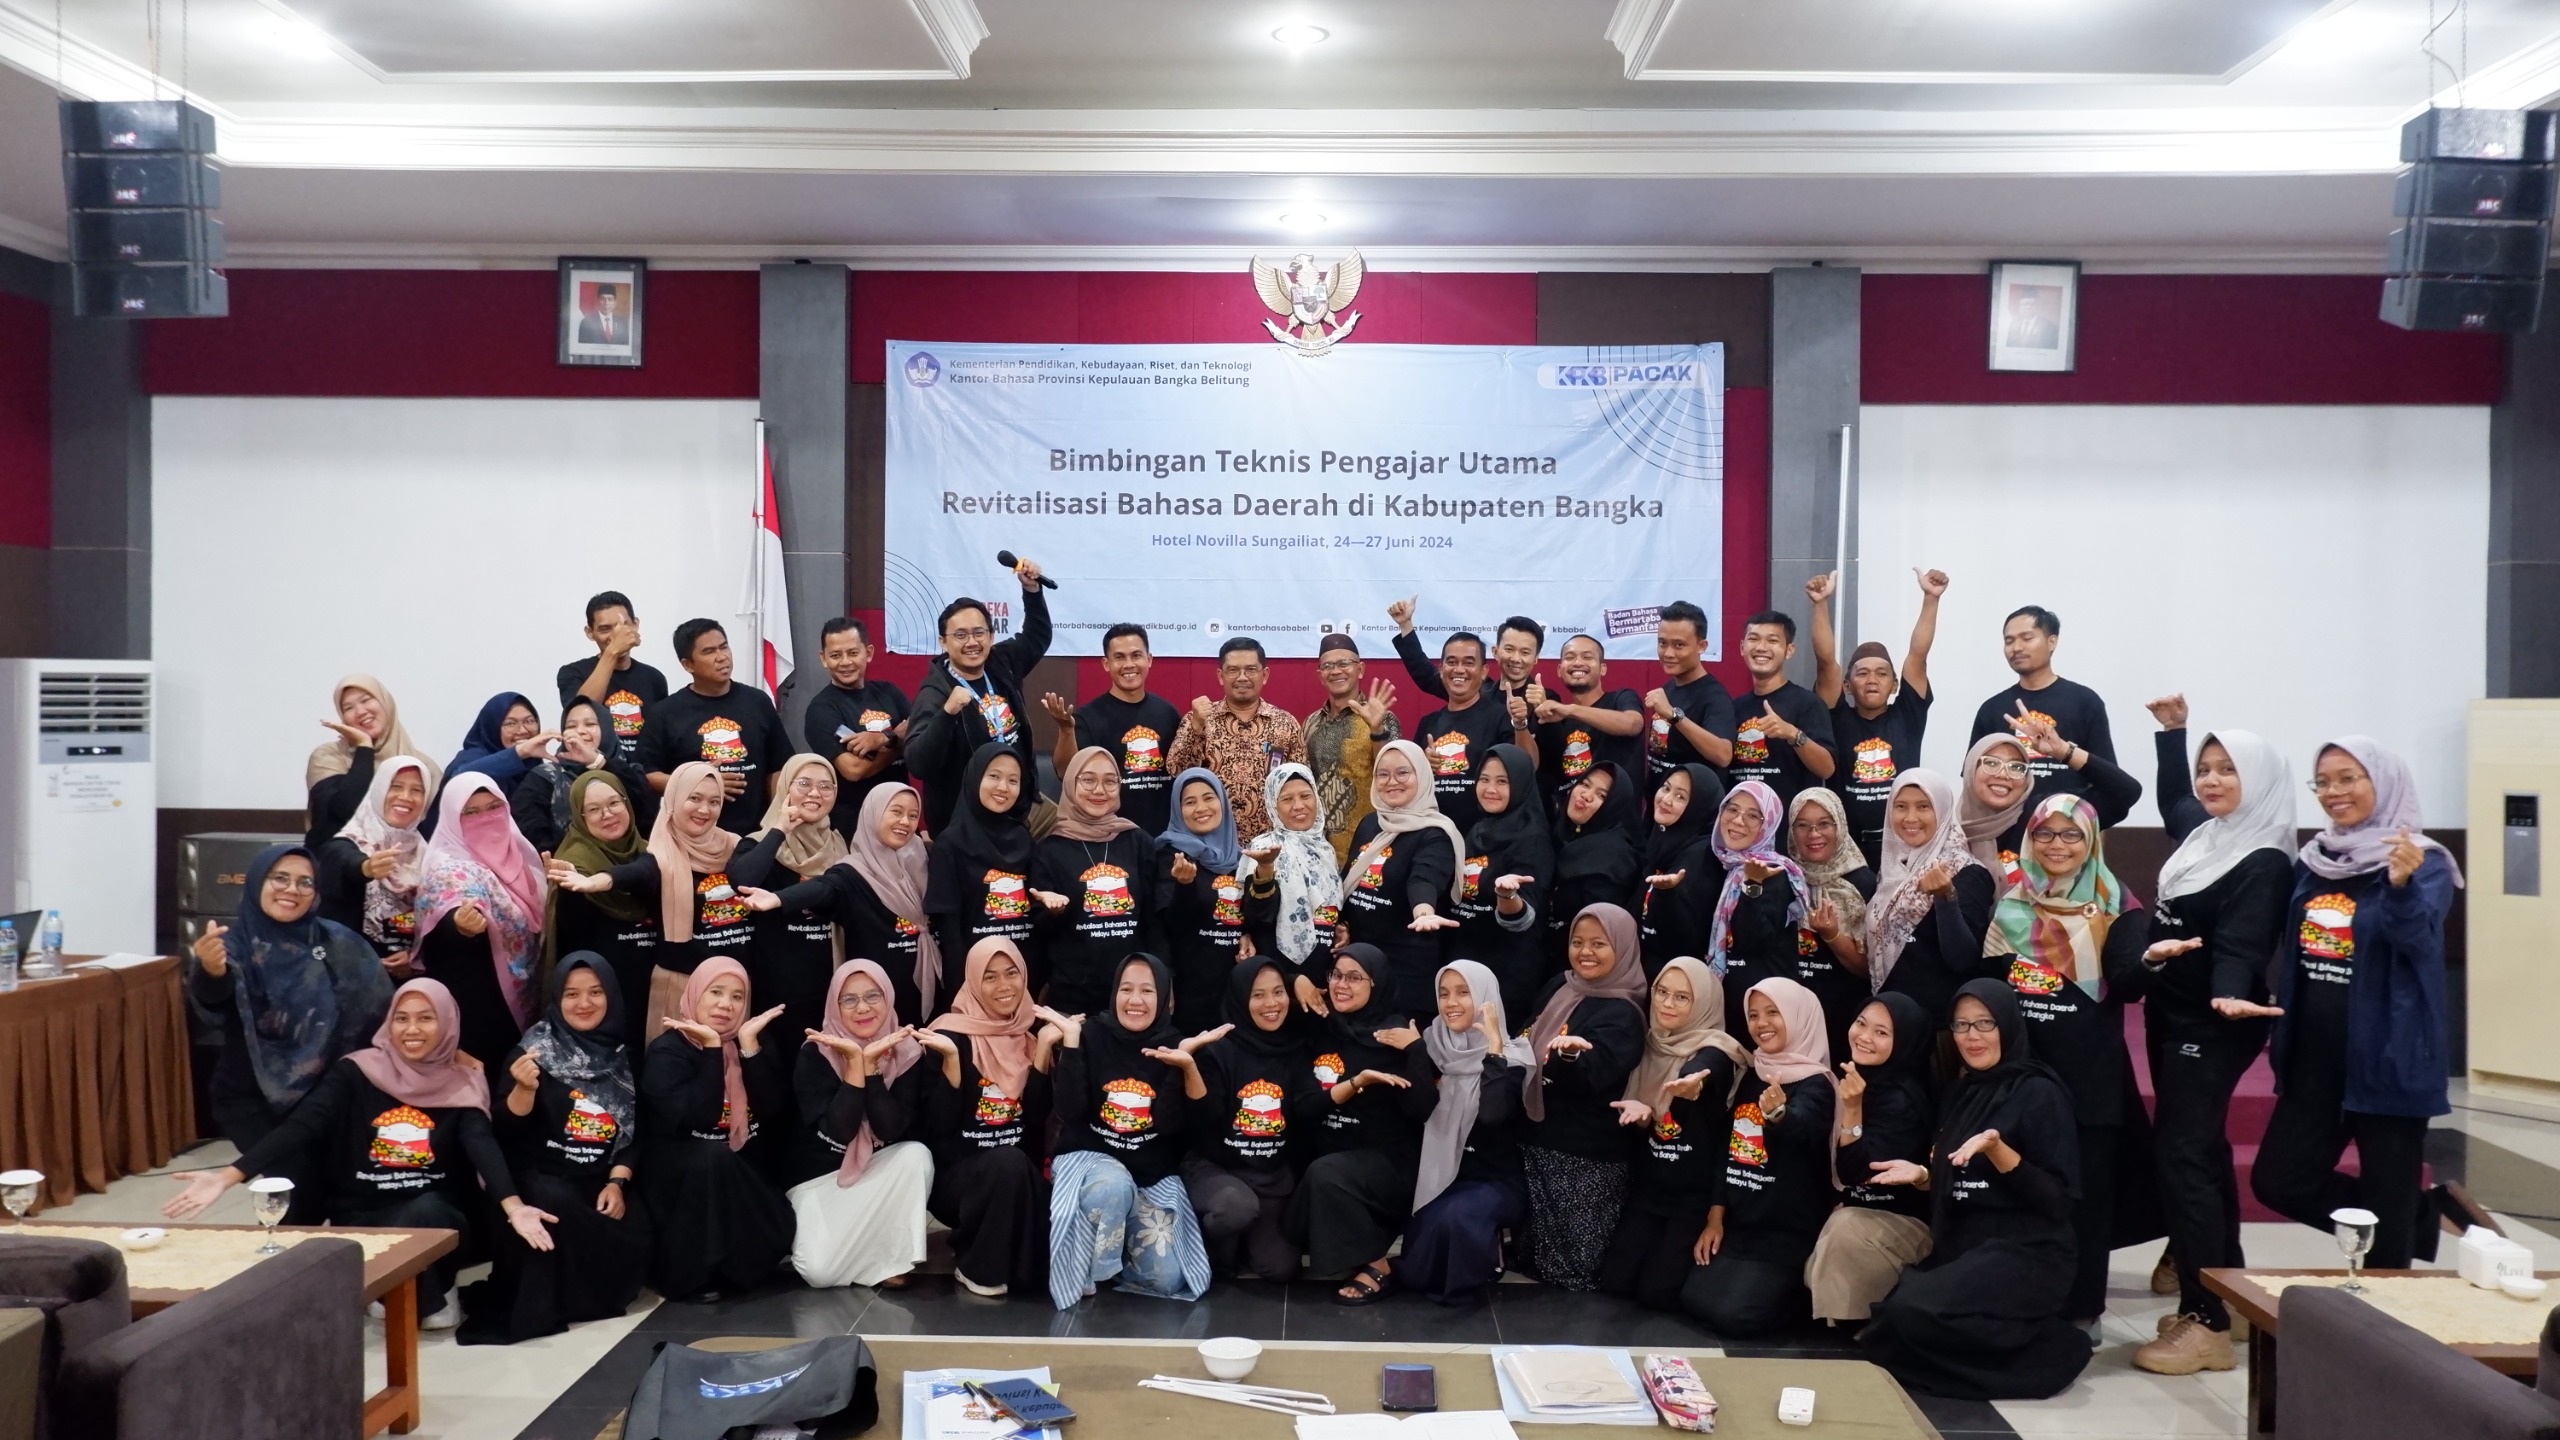 Bimbingan Teknik Pengajar Utama Revitalisasi Bahasa Daerah di Kabupaten Bangka